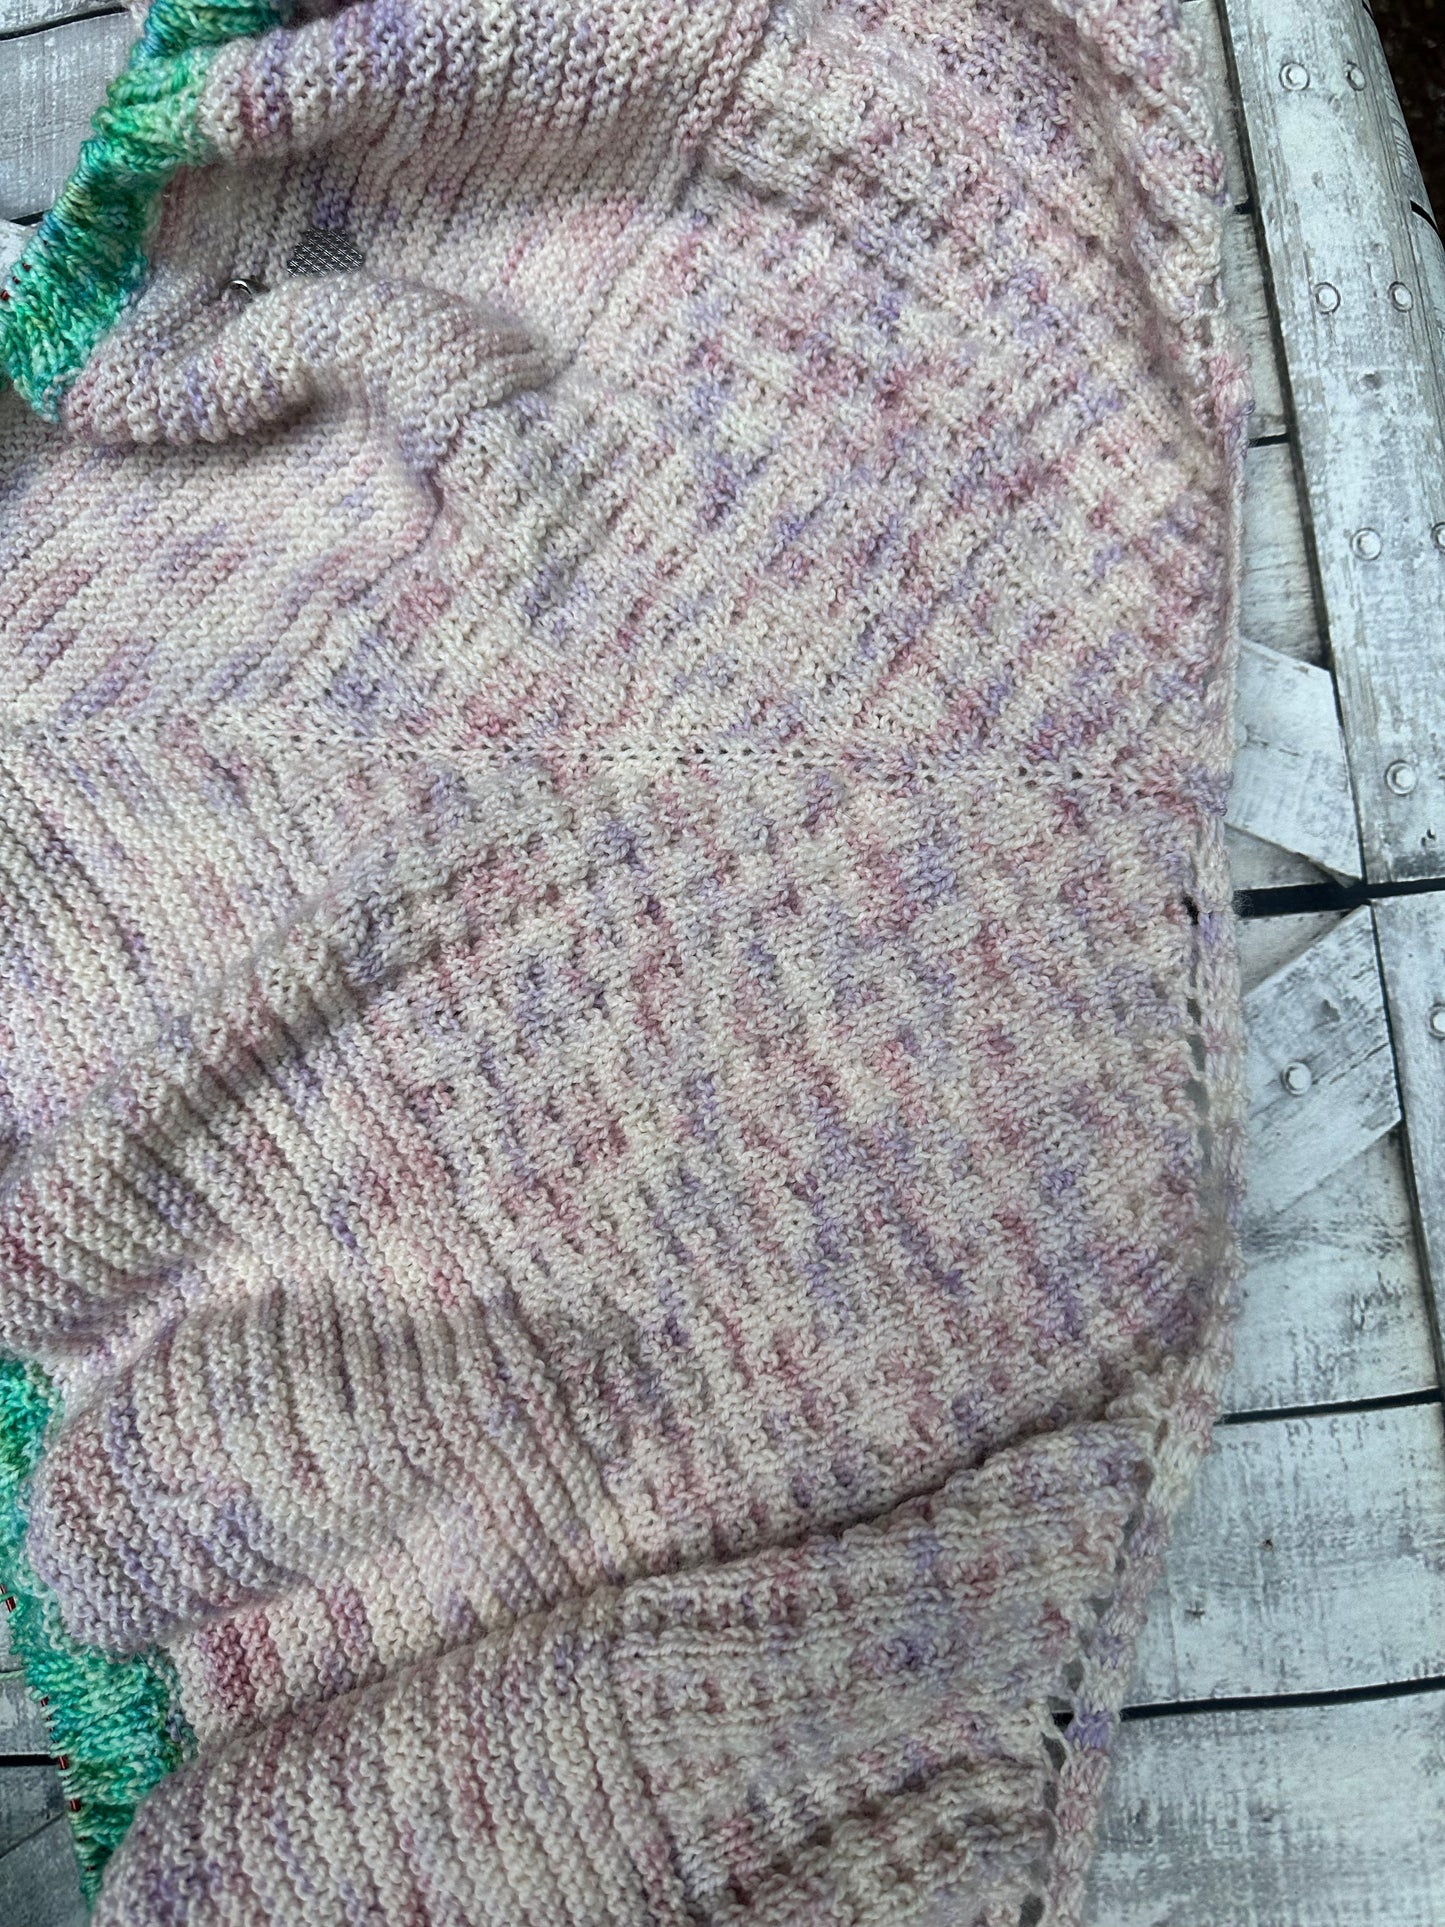 BEACHCOMBER KNITFLIX & CHILL KIT, Hand Dyed Superwash Merino Yarn,Toad Hollow Yarns (YARN ONLY, NO PATTERN)